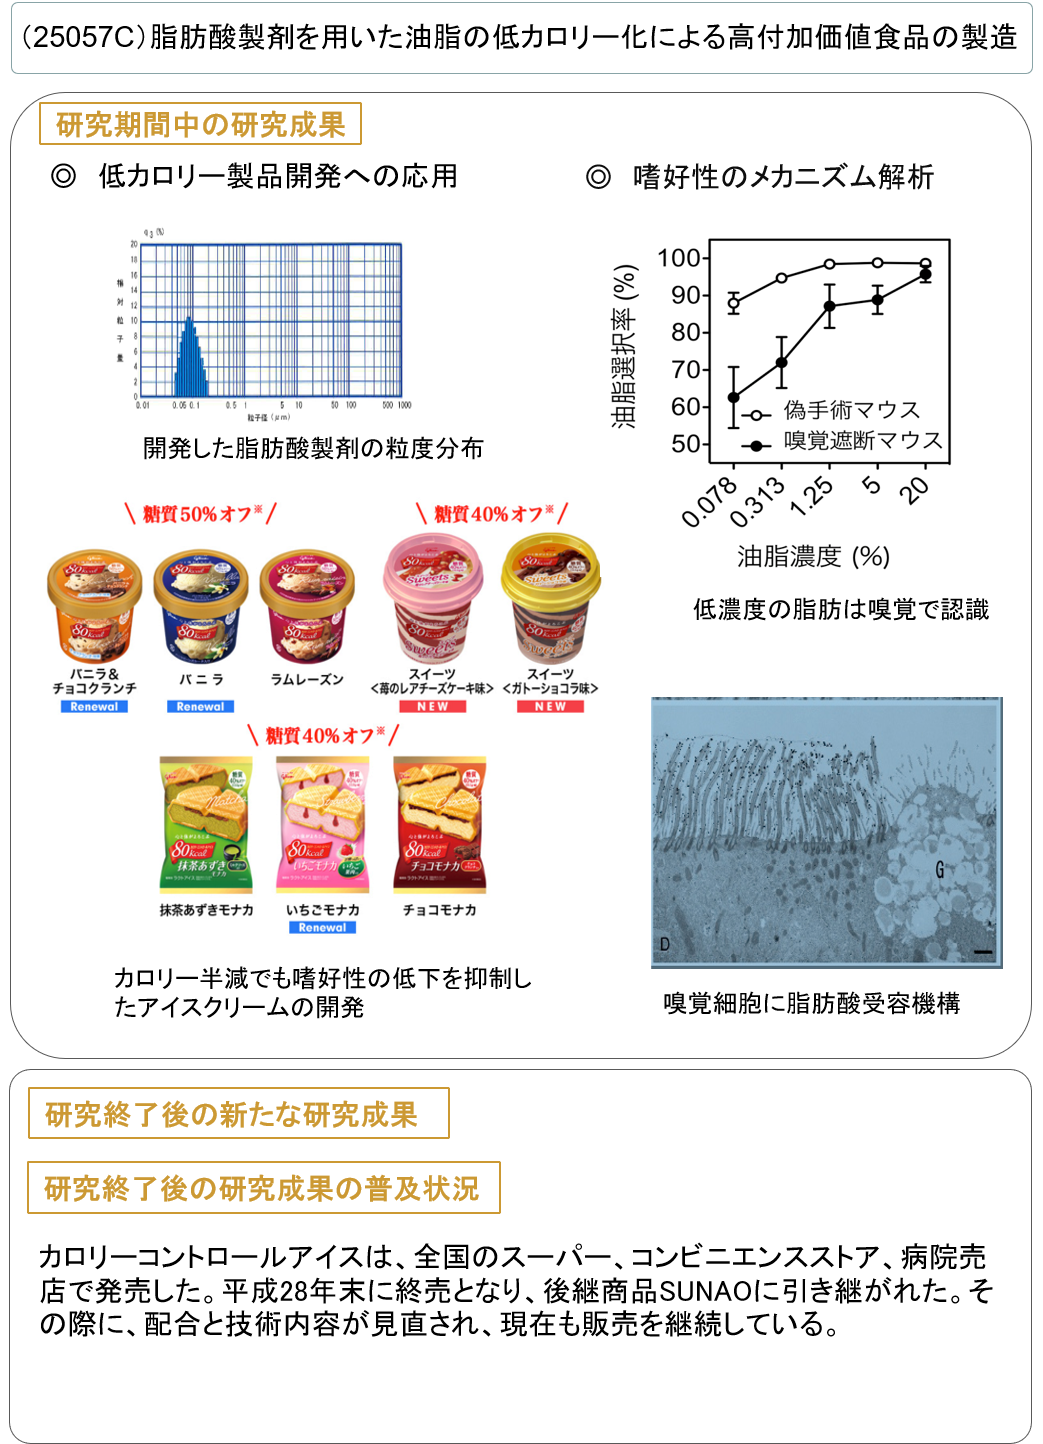 (25057C) 脂肪酸製剤を用いた油脂の低カロリー化による高付加価値食品の製造